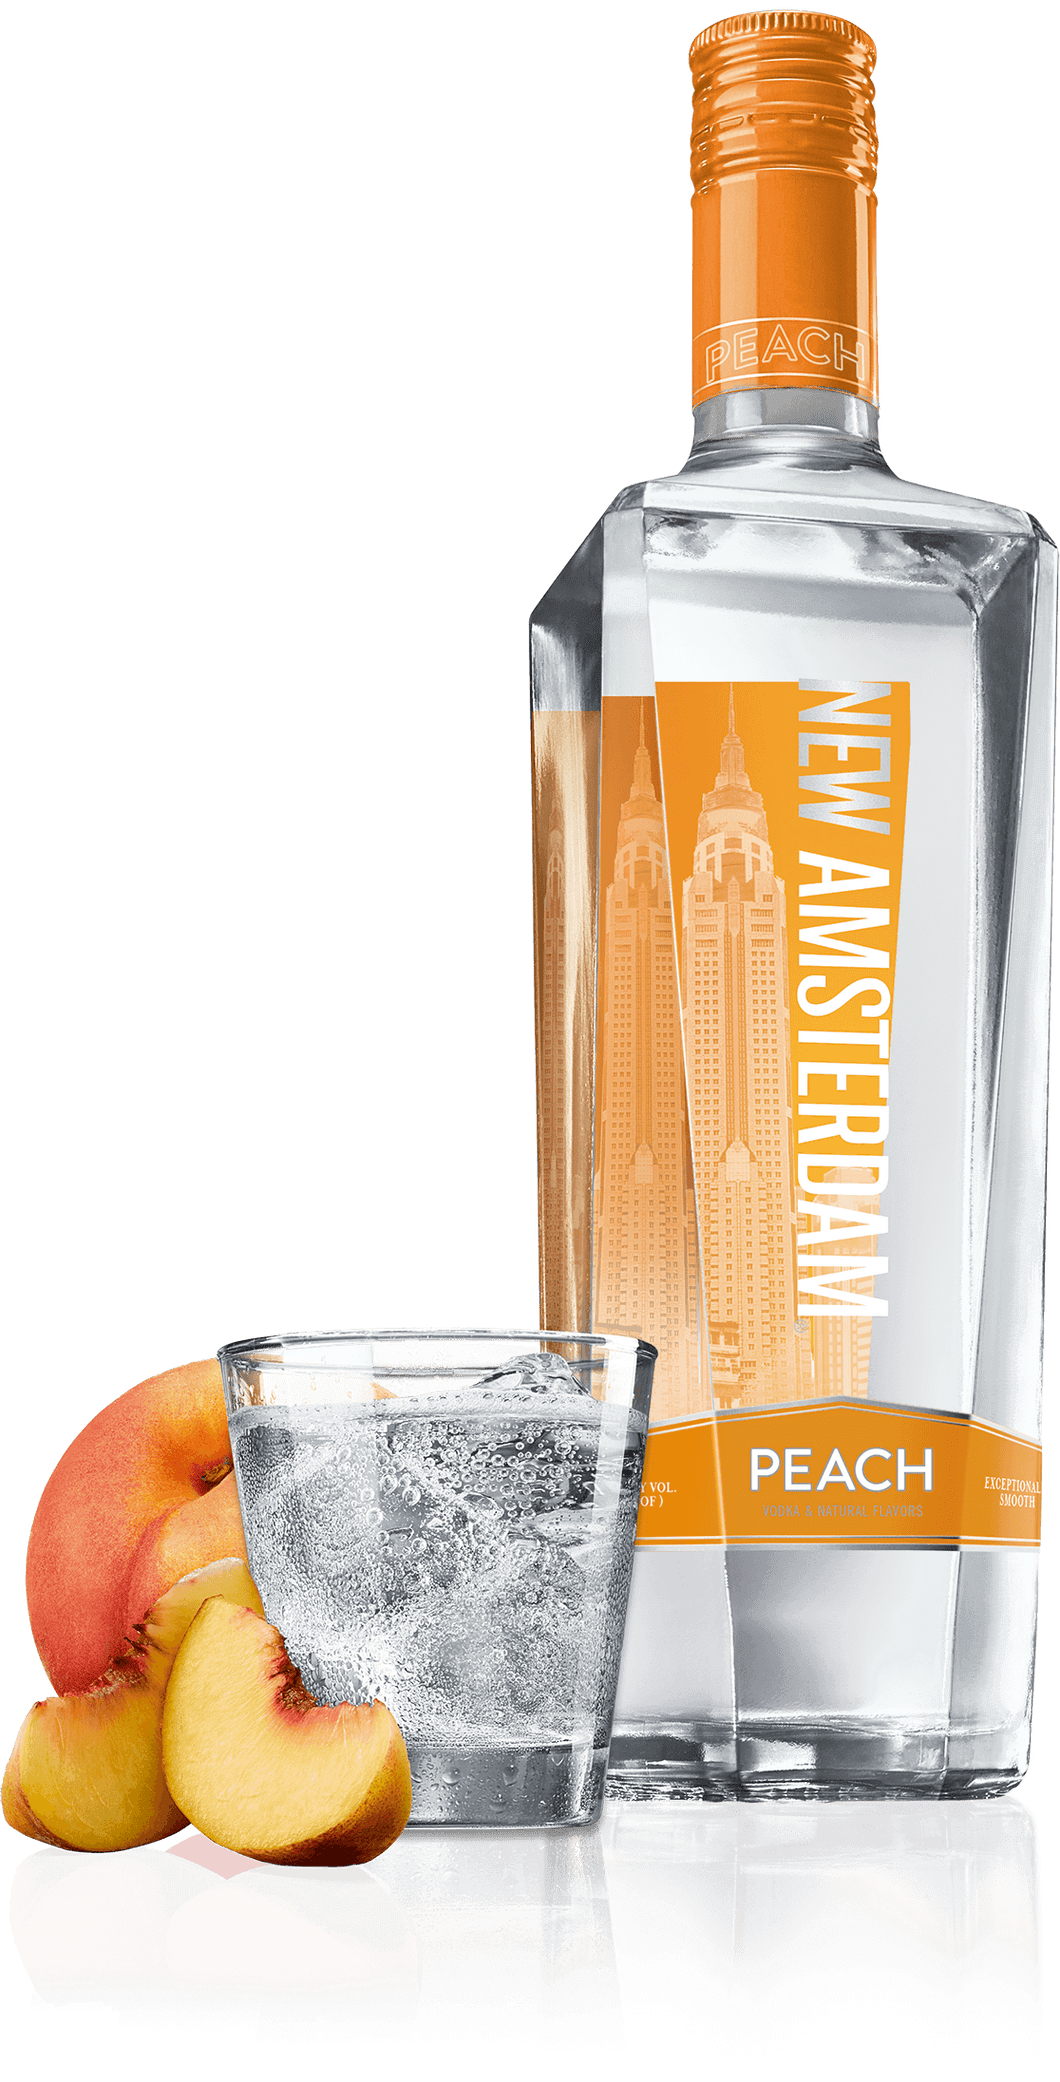 New Amsterdam Peach